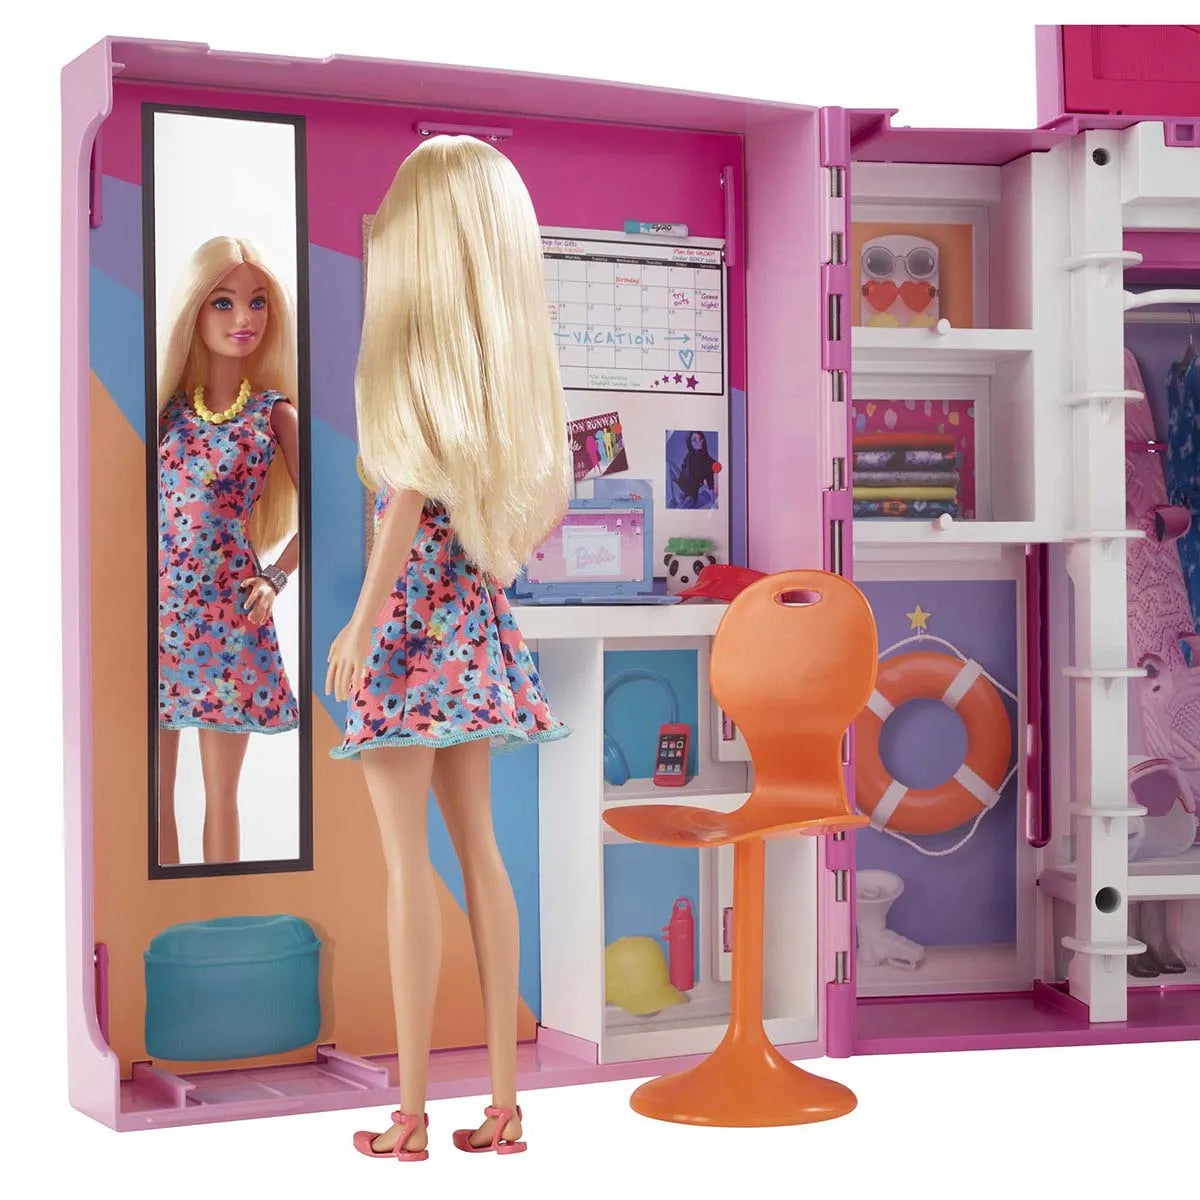 Barbie Fashion Y Beauty: Barbie Dream Closet Nuevo